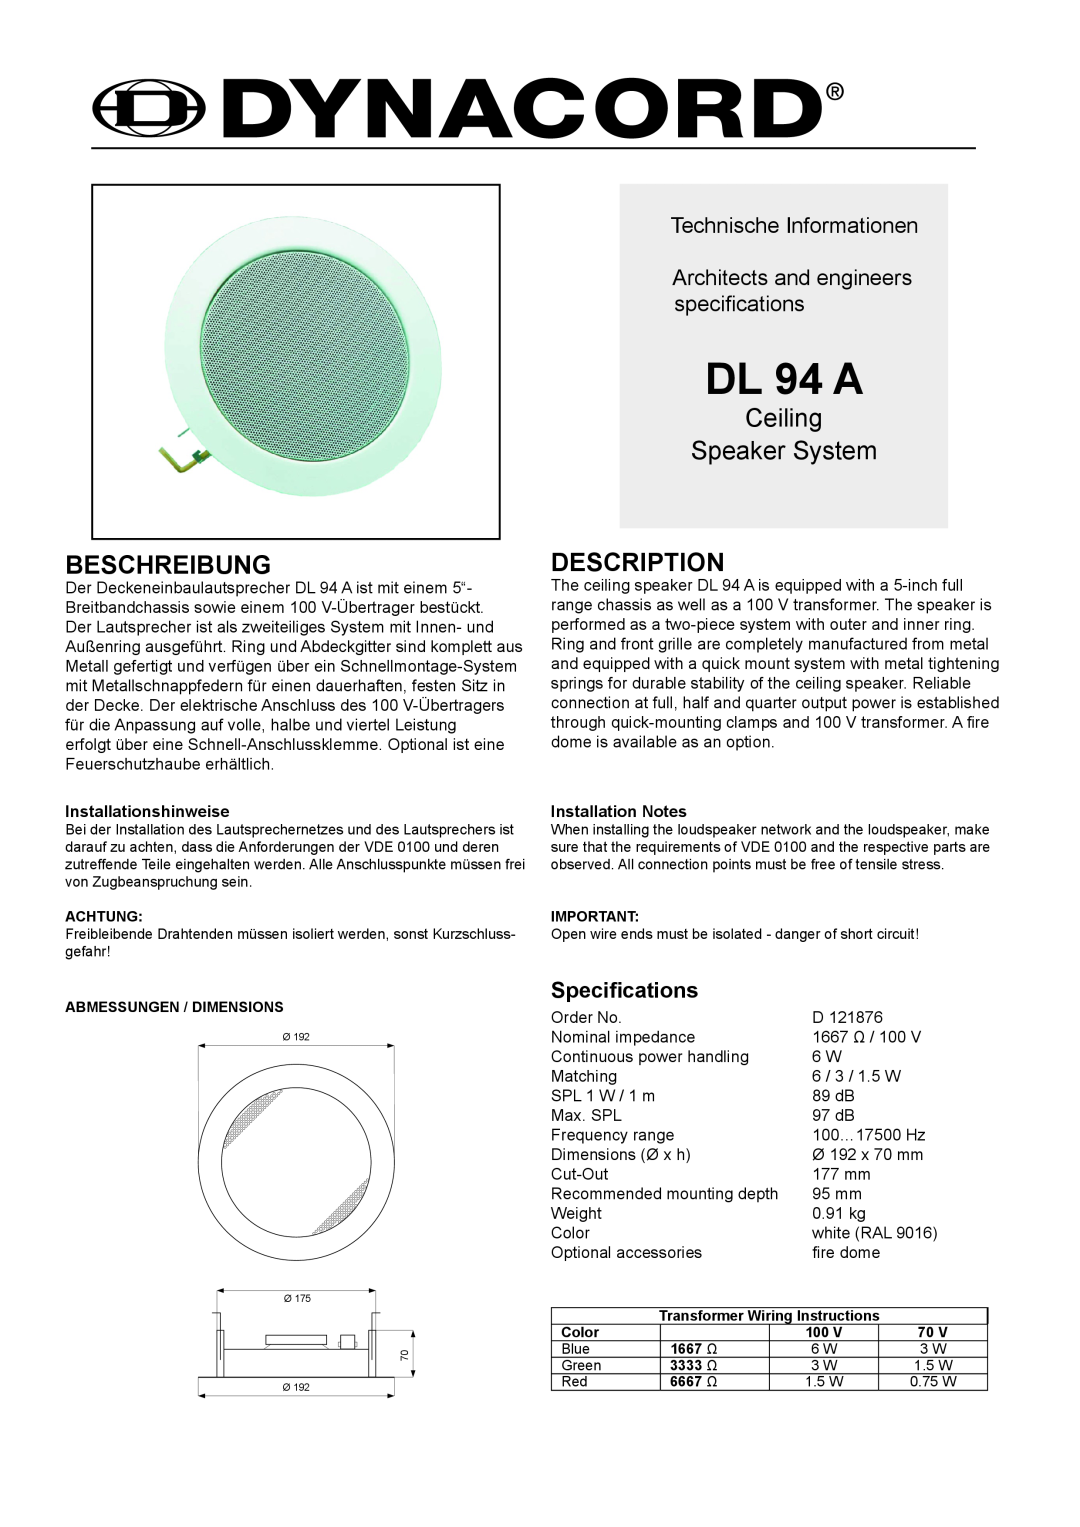 Dynacord DL 94 A dimensions Beschreibung, Ceiling Speaker System, Description, Technische Informationen, Specifications 